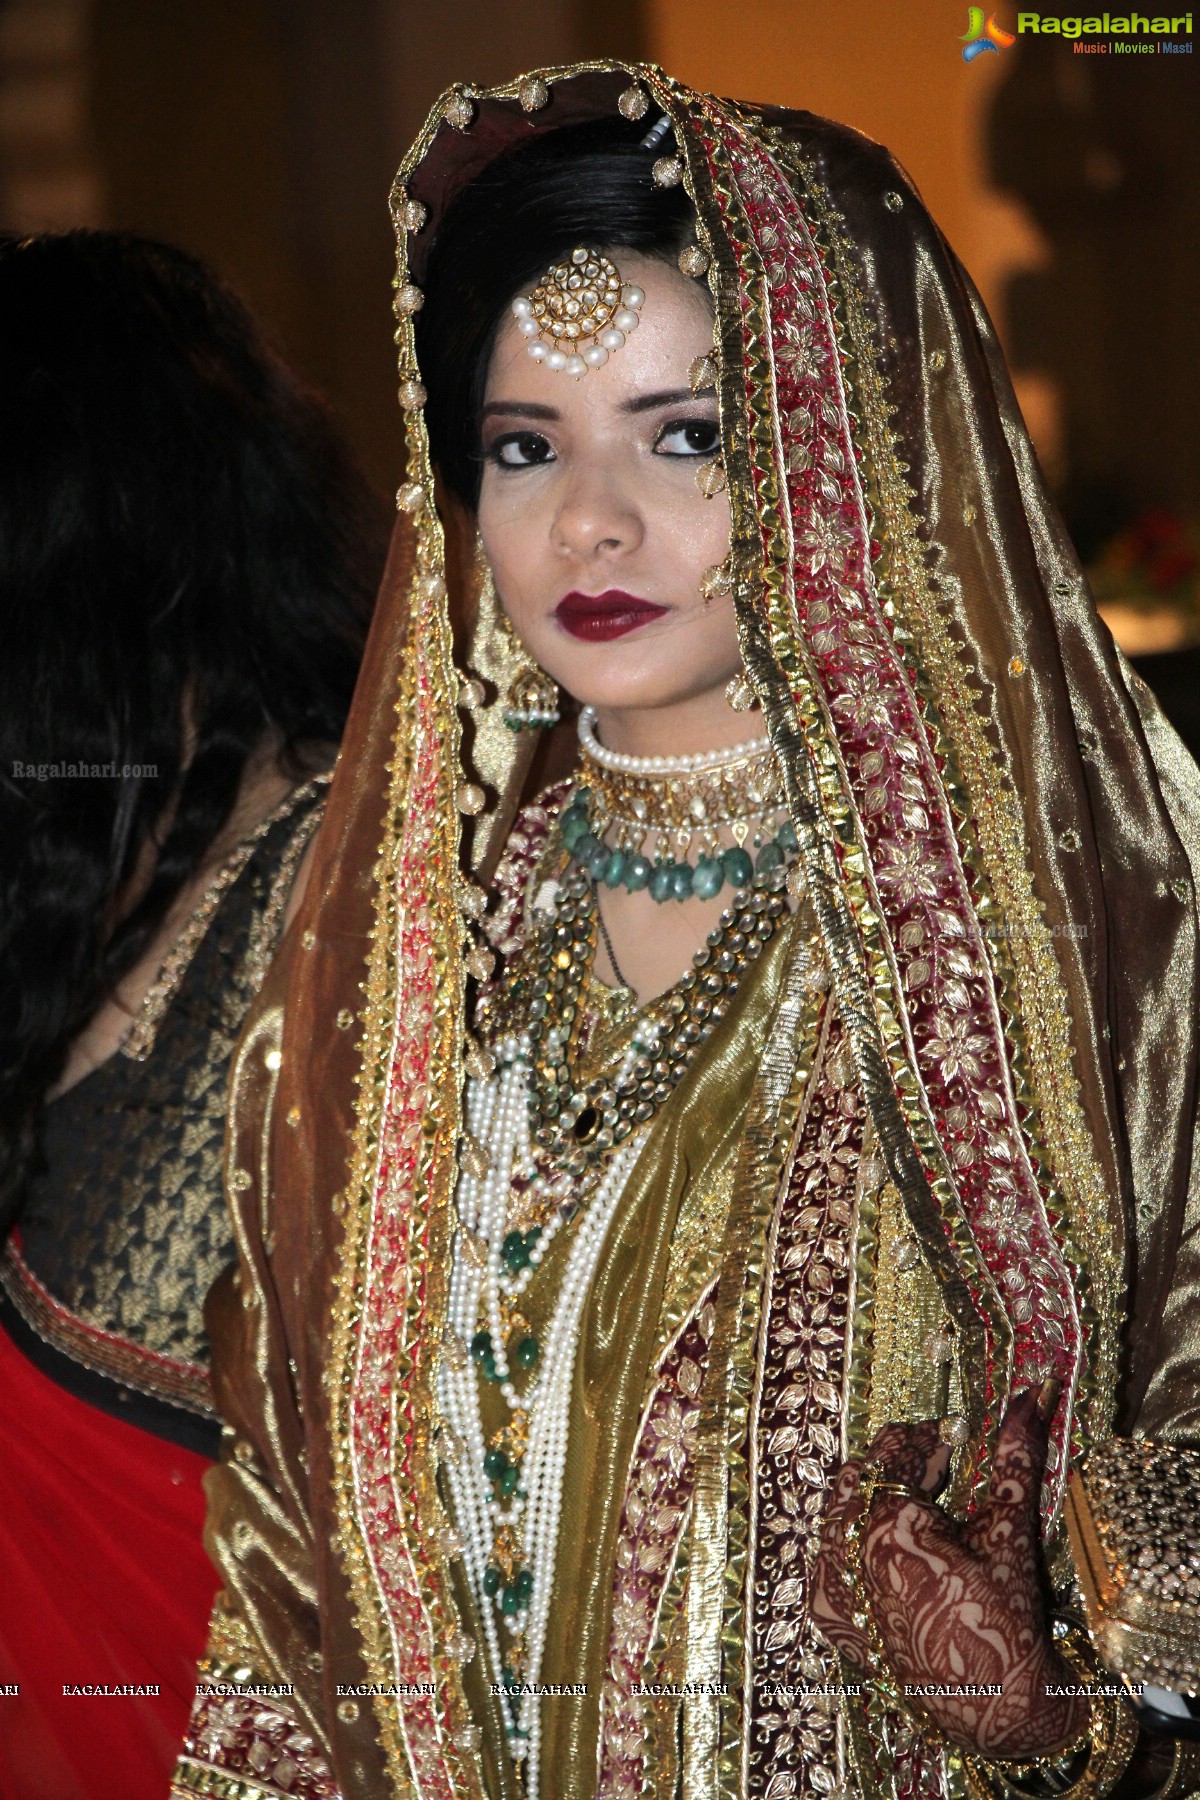 Grand Wedding Ceremony of Sahebzadi Feroze Jahan Begum-Syed Abbas Ali at Chowmahalla Palace, Hyderabad